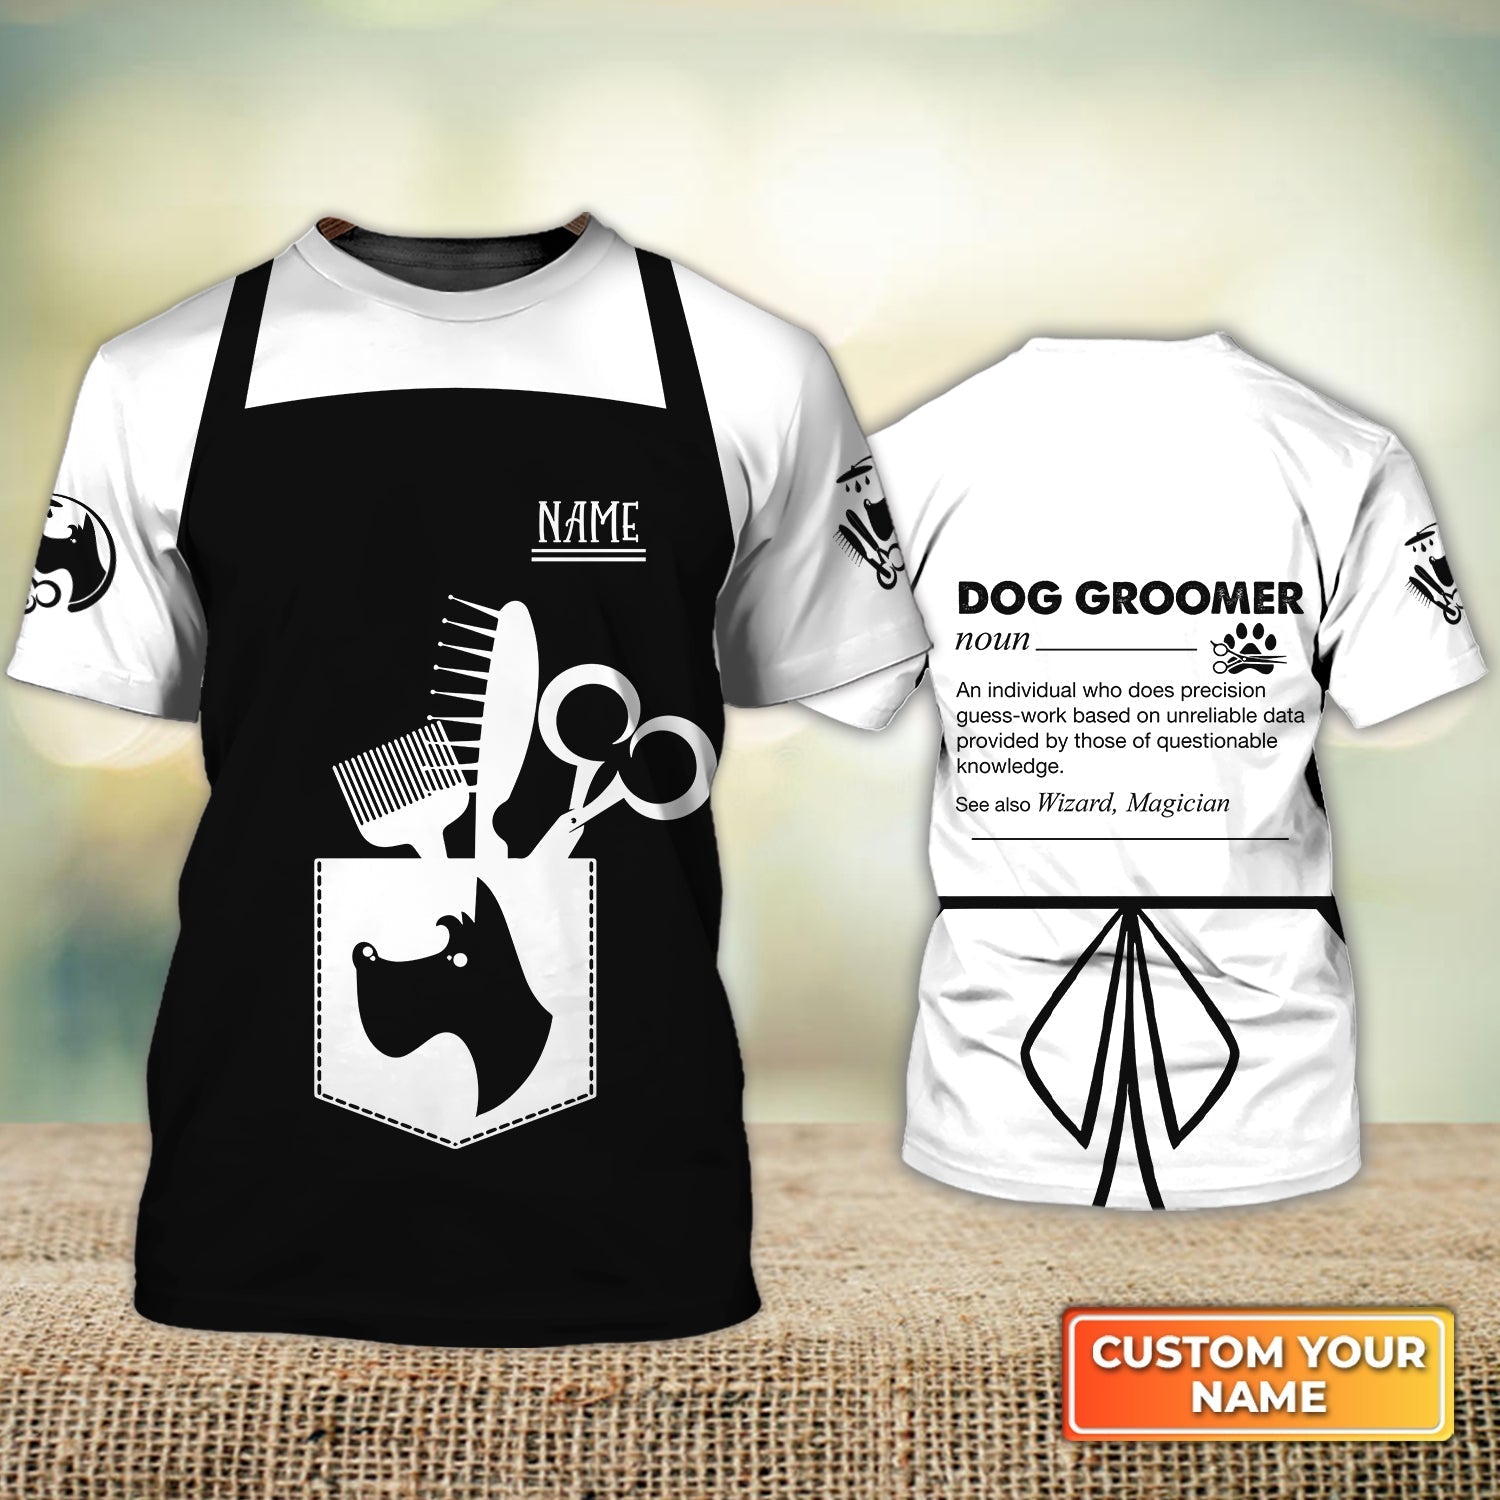 Custom 3D All Over Print Cute Dog Groomer Shirt Apron Dog Groomer Pet Groomer Uniform Salon Pet